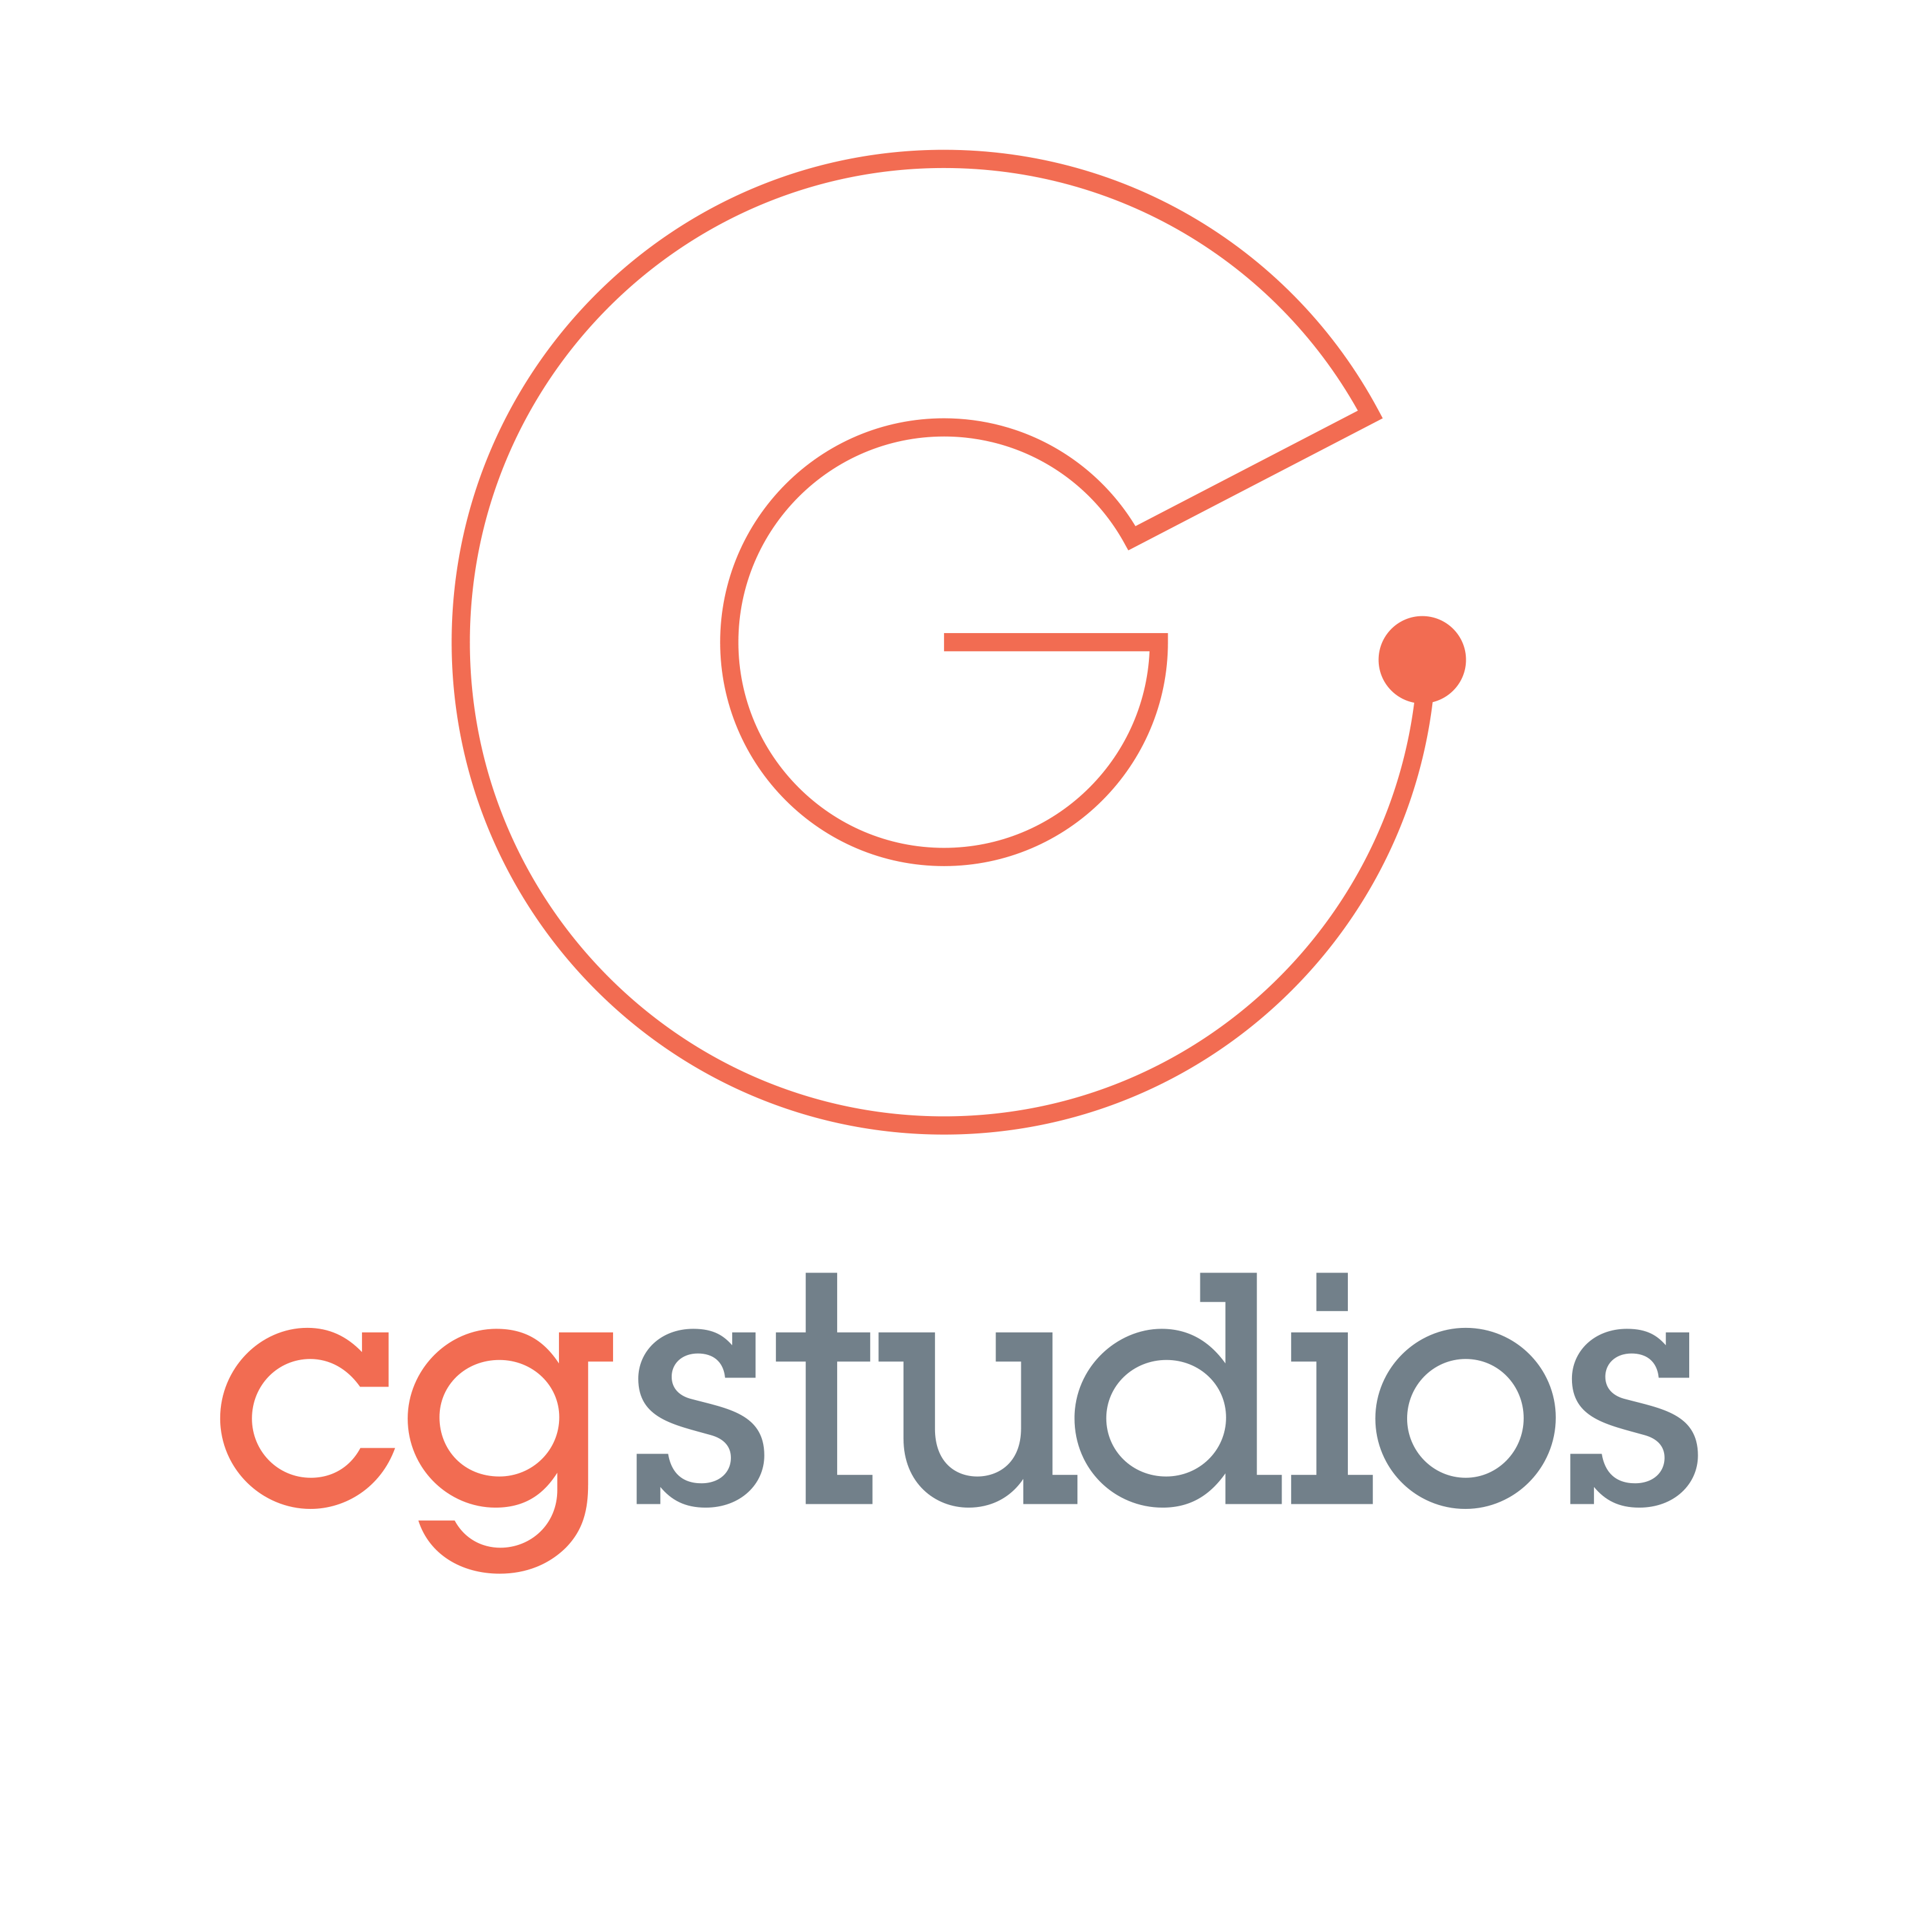 CG Studios profile on Qualified.One